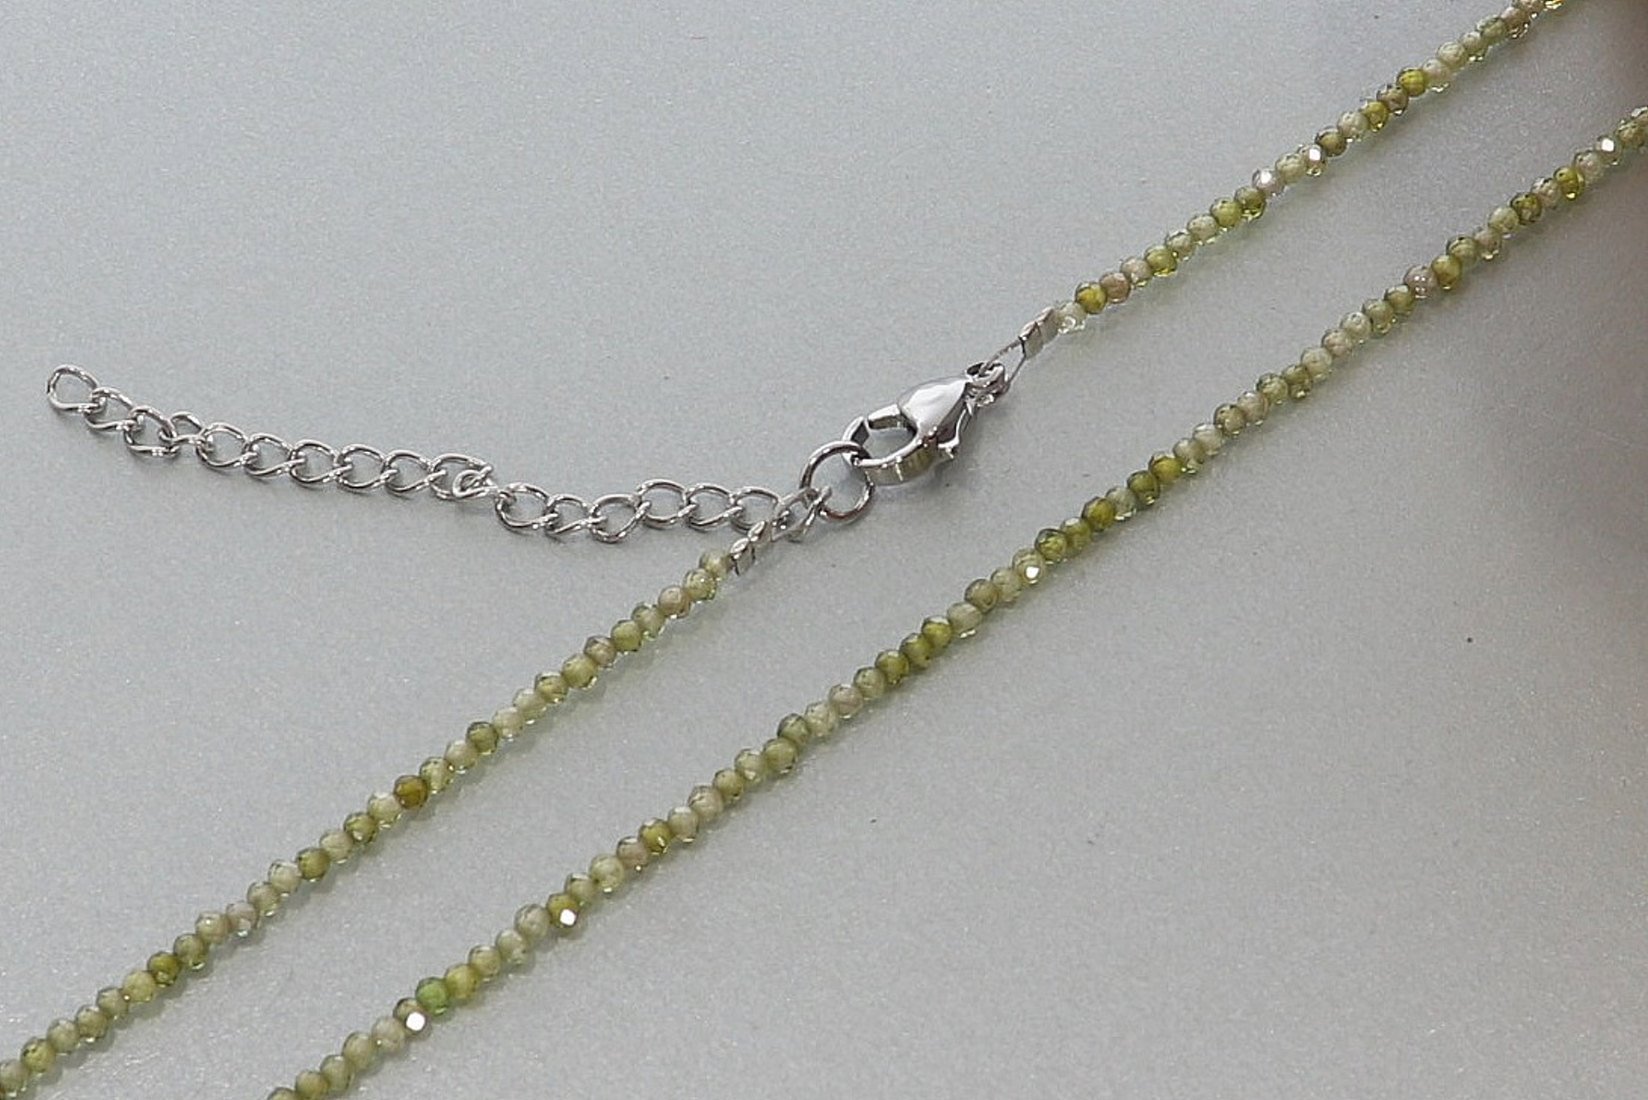 Zirkonia olivgrün Kugel Halskette facettiert Silber farben 2mm - 40-45cm Kettenverlängerer KK313